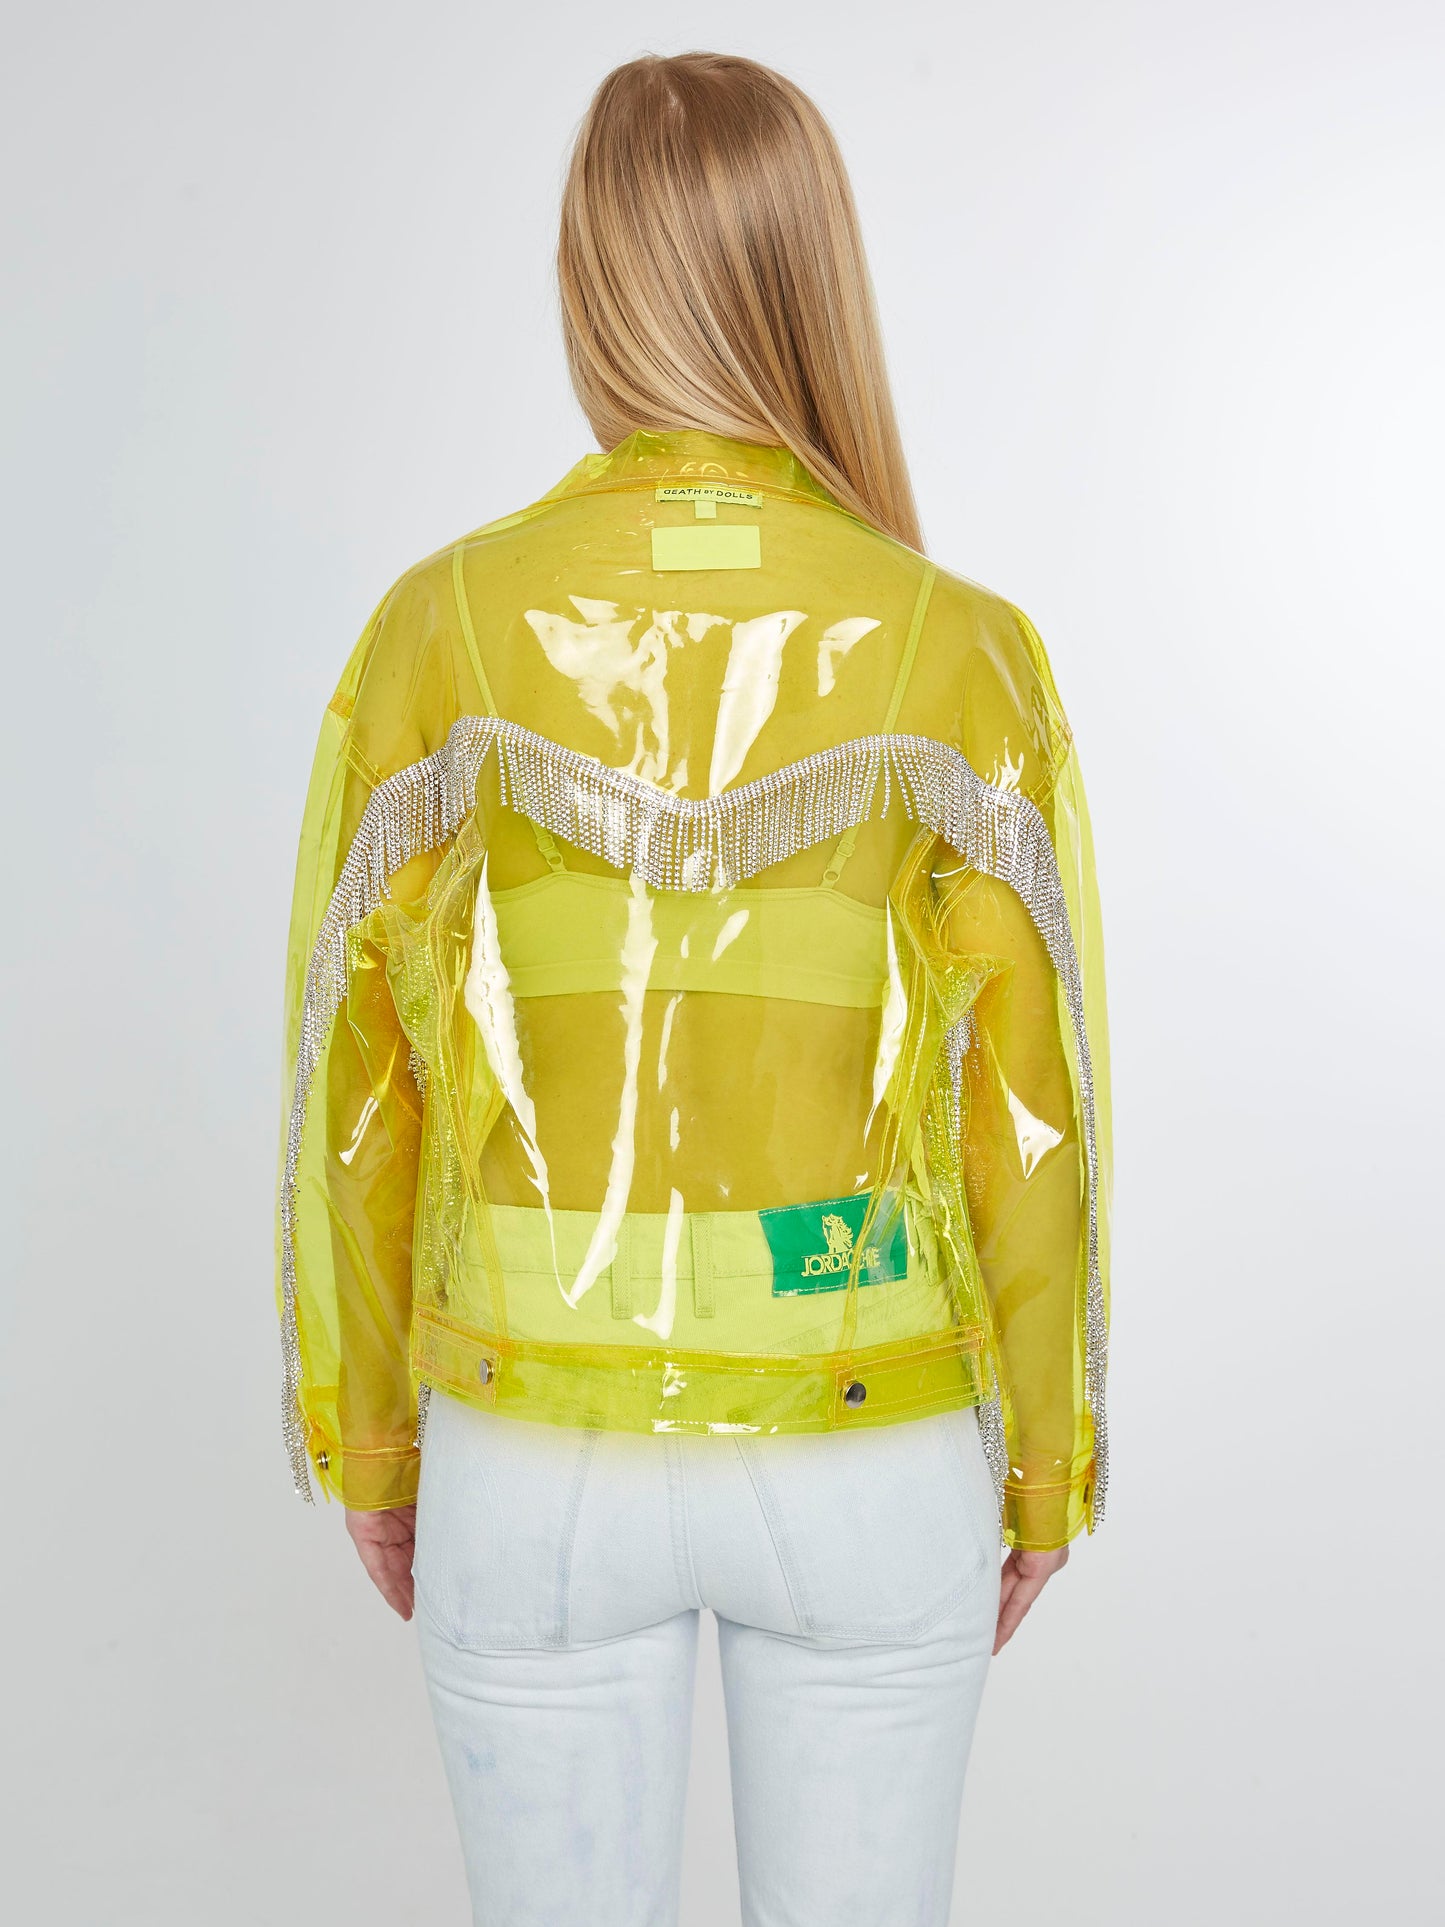 Plastic yellow trucker jacket with fringe